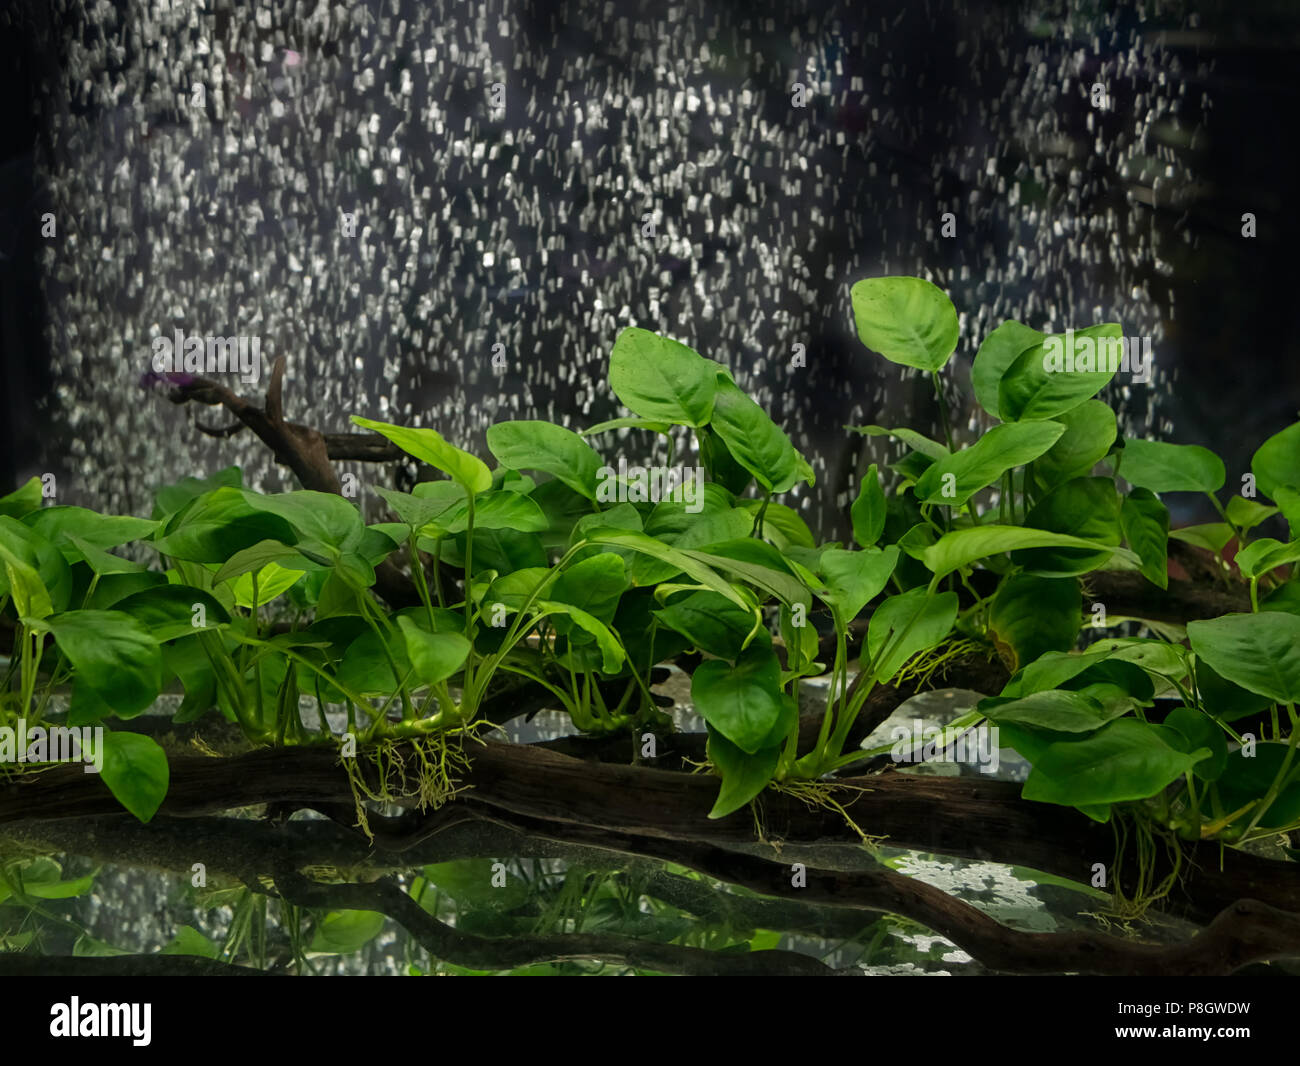 Anubias barteri aquarium plants, Aquarium tank with a variety of aquatic plants Stock Photo